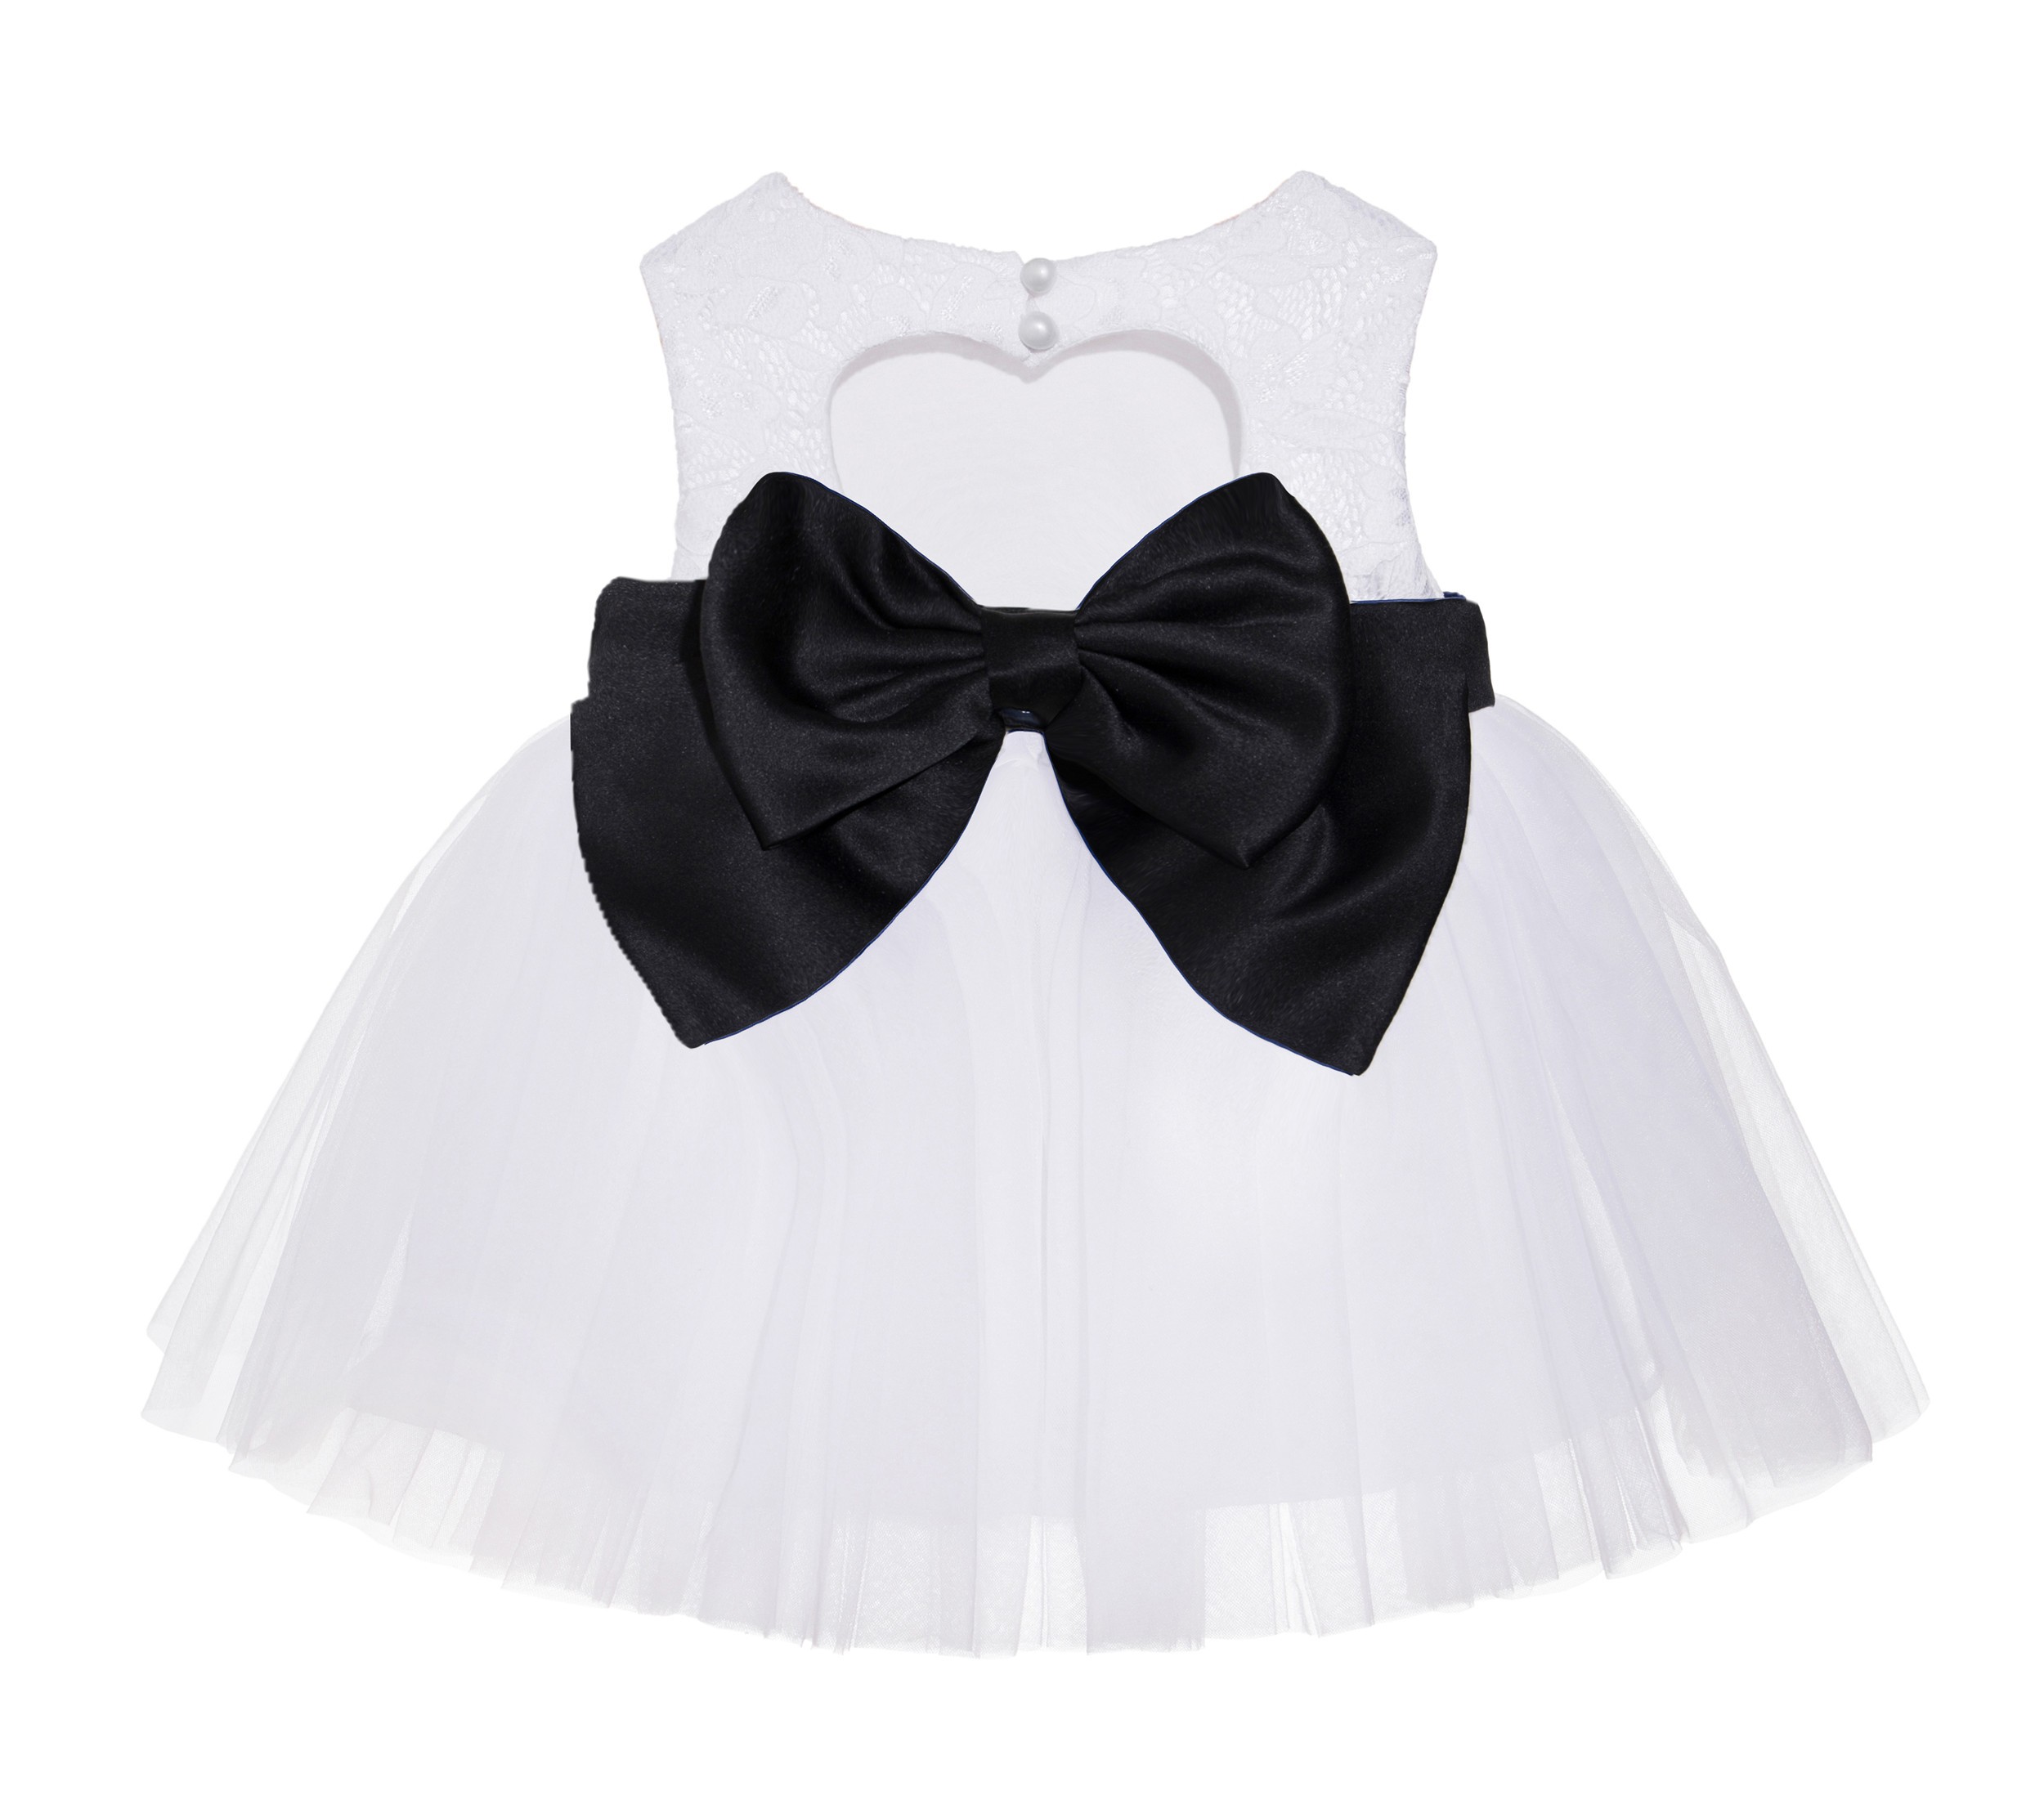 White / Black Lace Heart Cutout Flower Girl Dress Baby Dress BB1